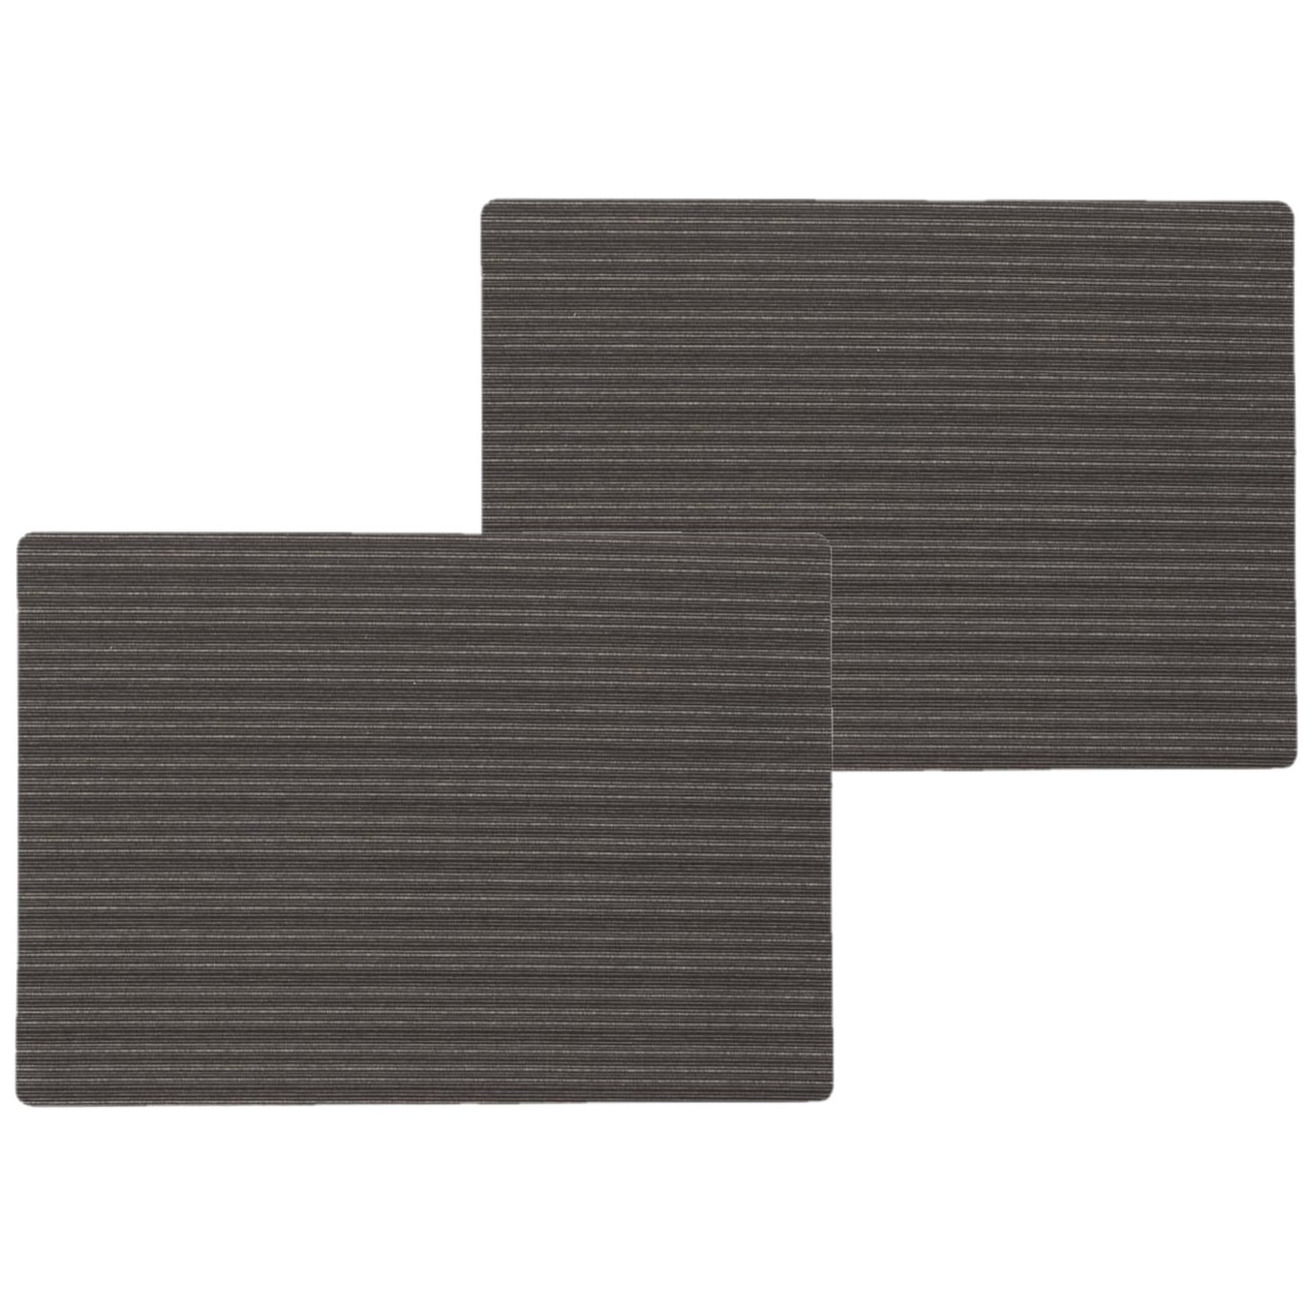 Wicotex 8x stuks stevige luxe Tafel placemats Lines zwart 30 x 43 cm -